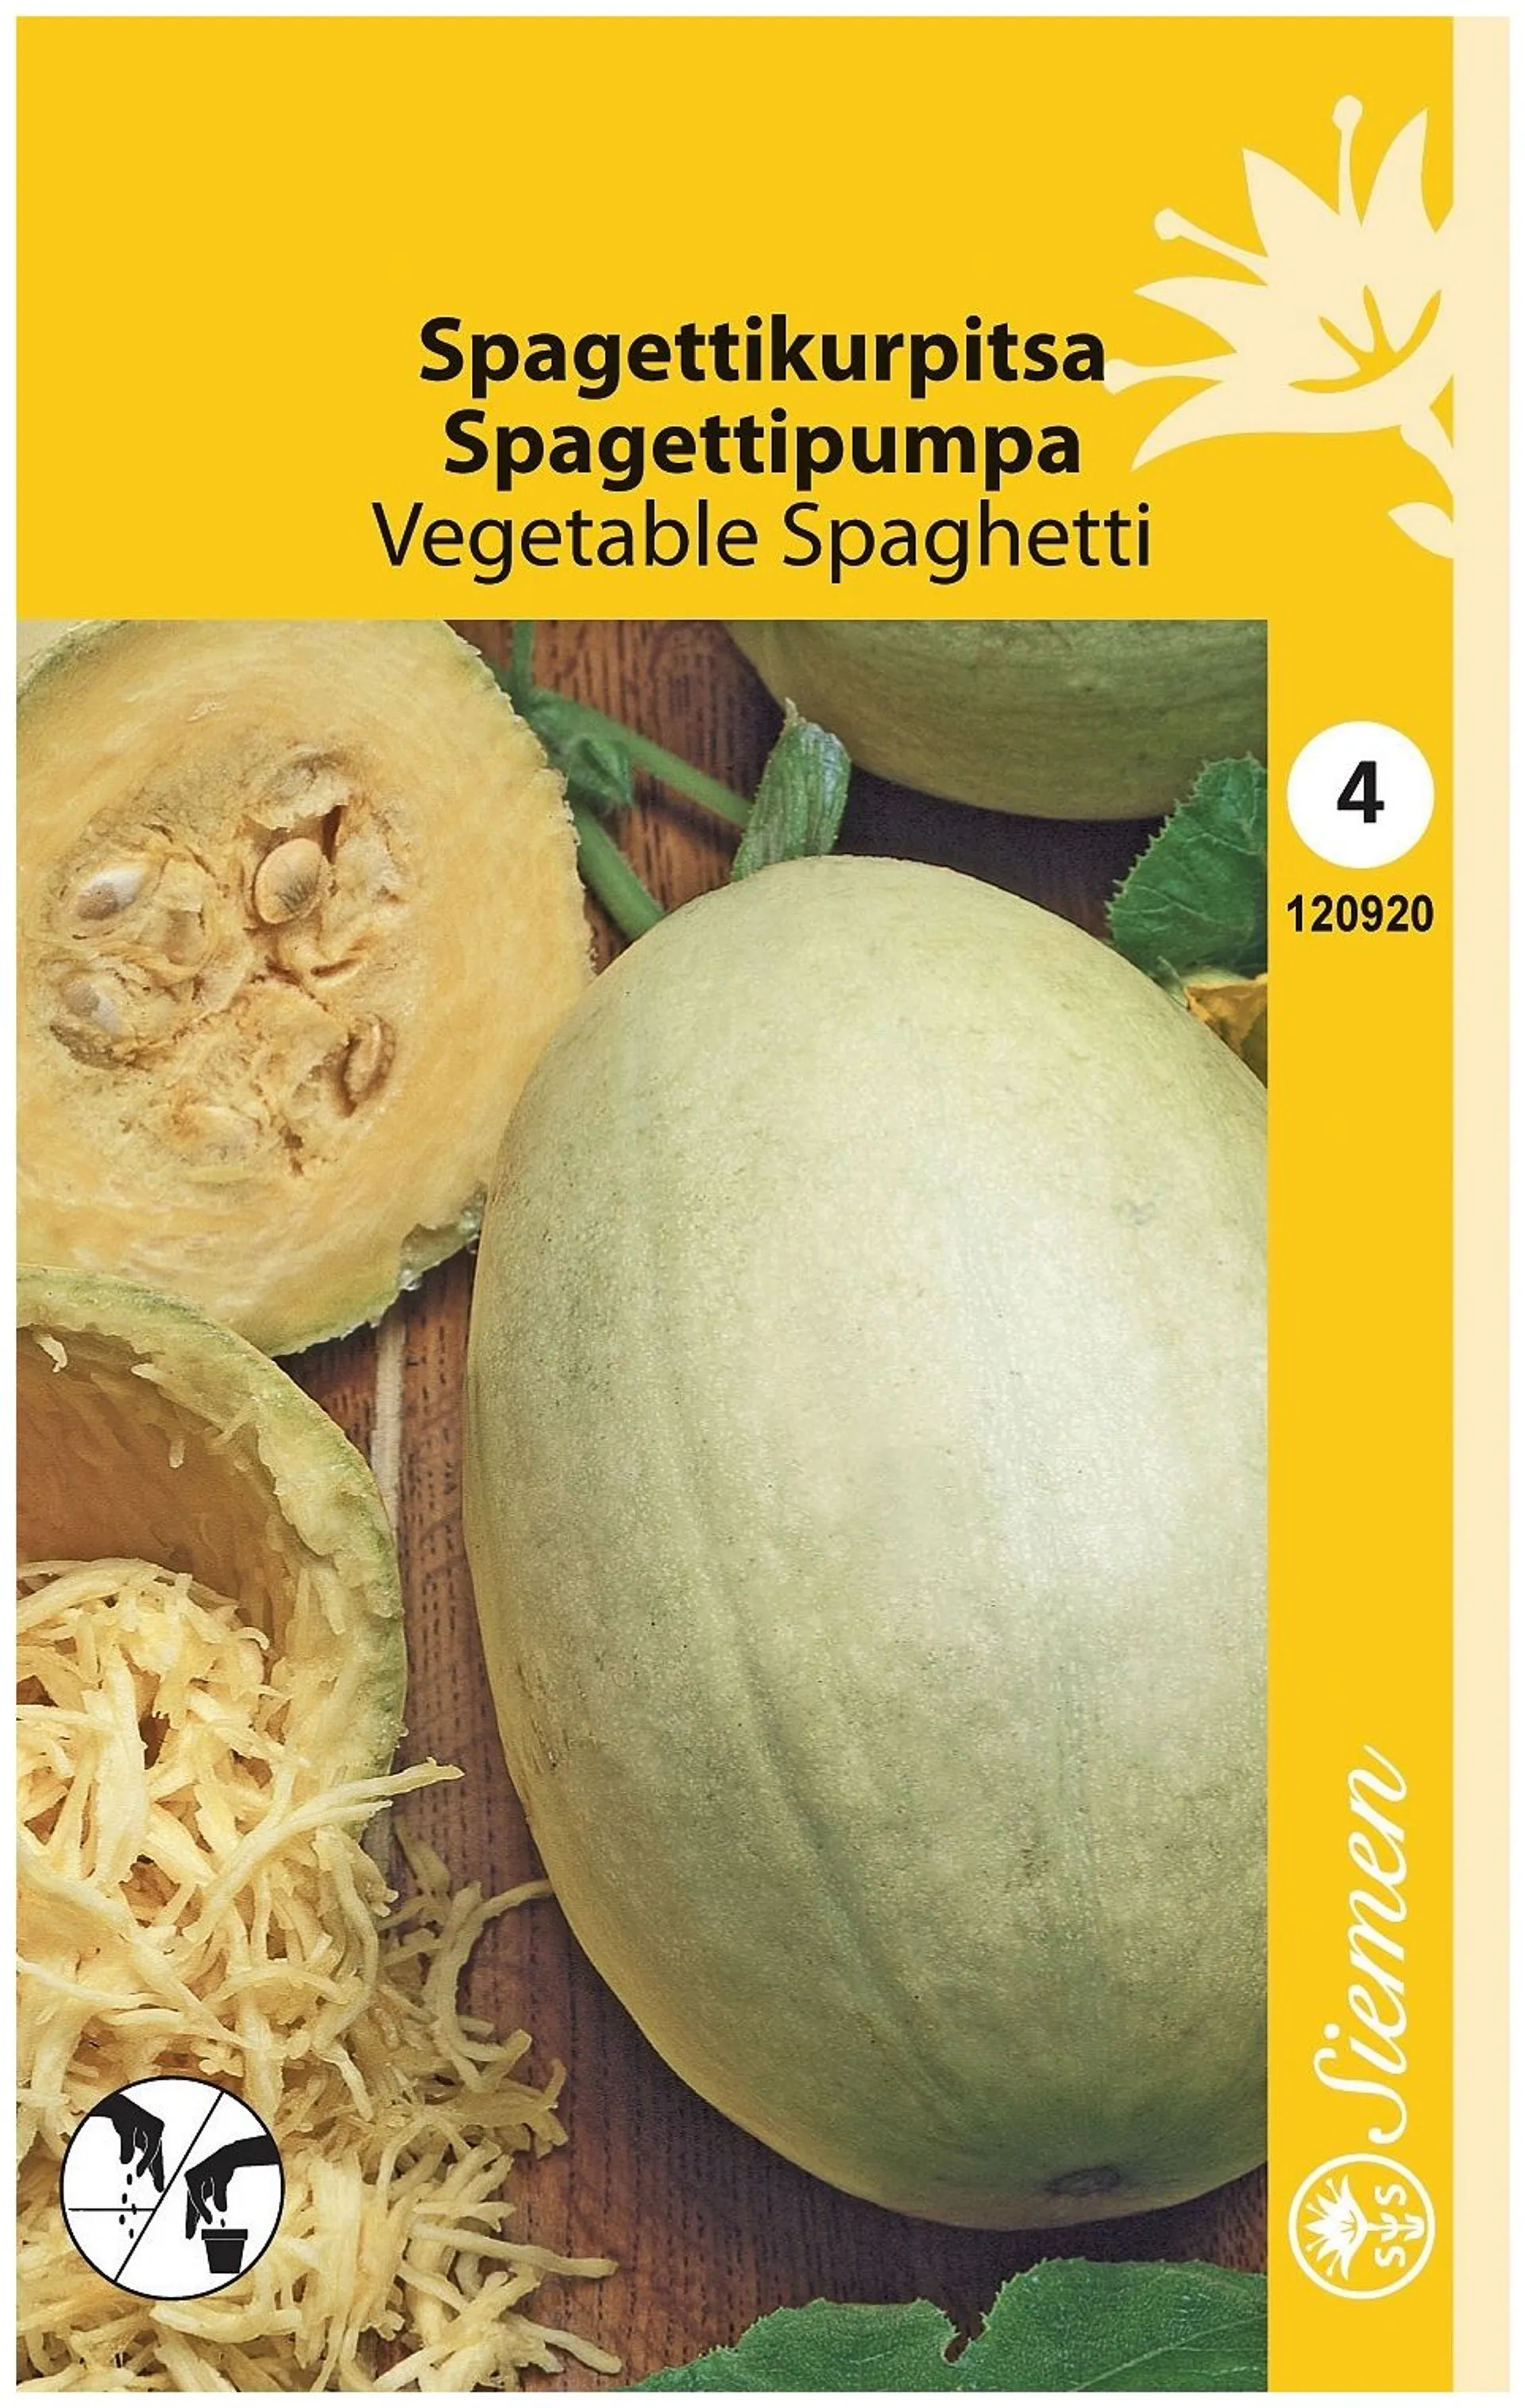 Siemen spagettikurpitsa Vegetable Spaghetti